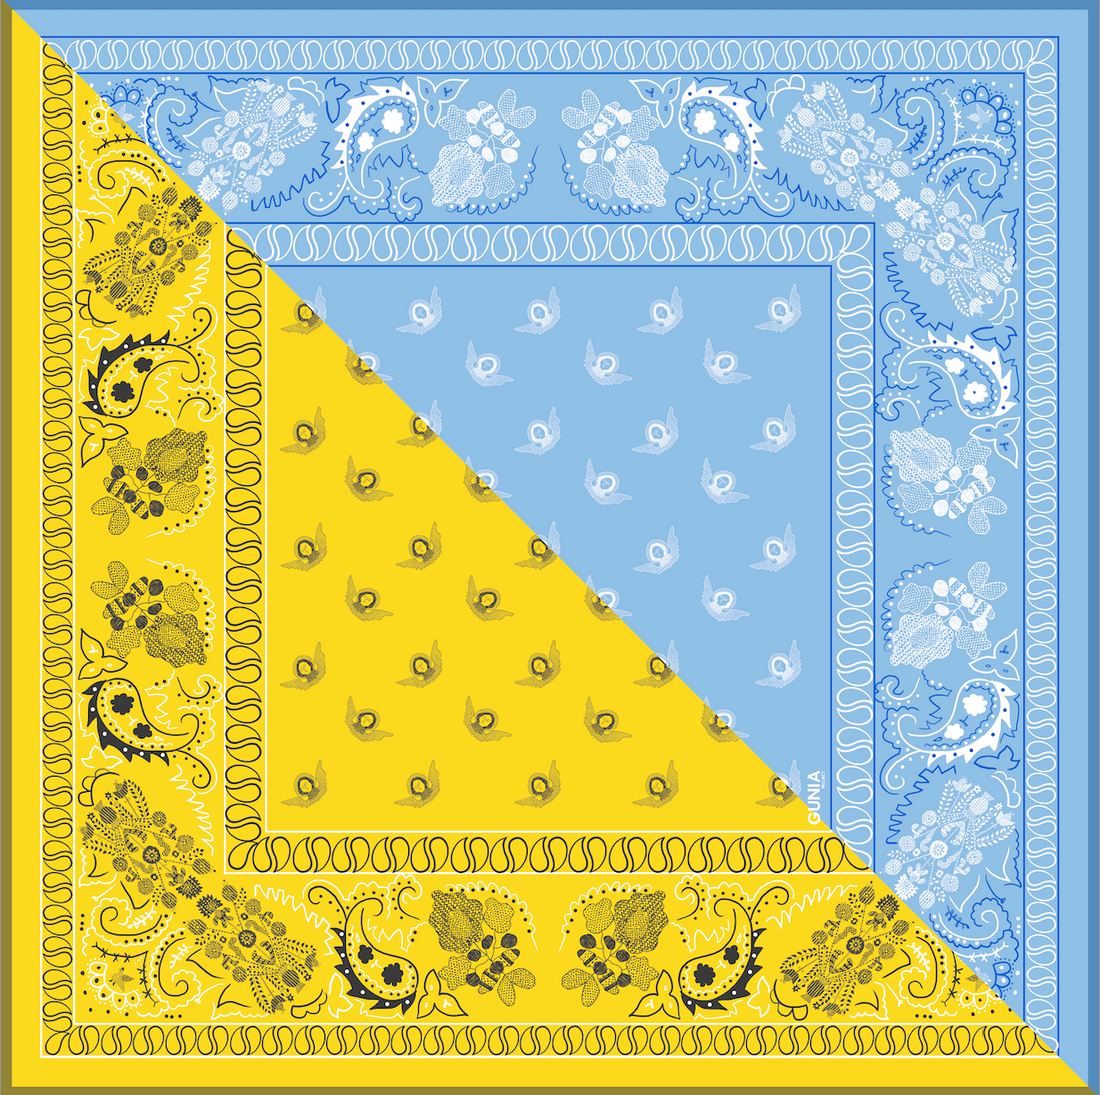 Silk bandana in blue & yellow